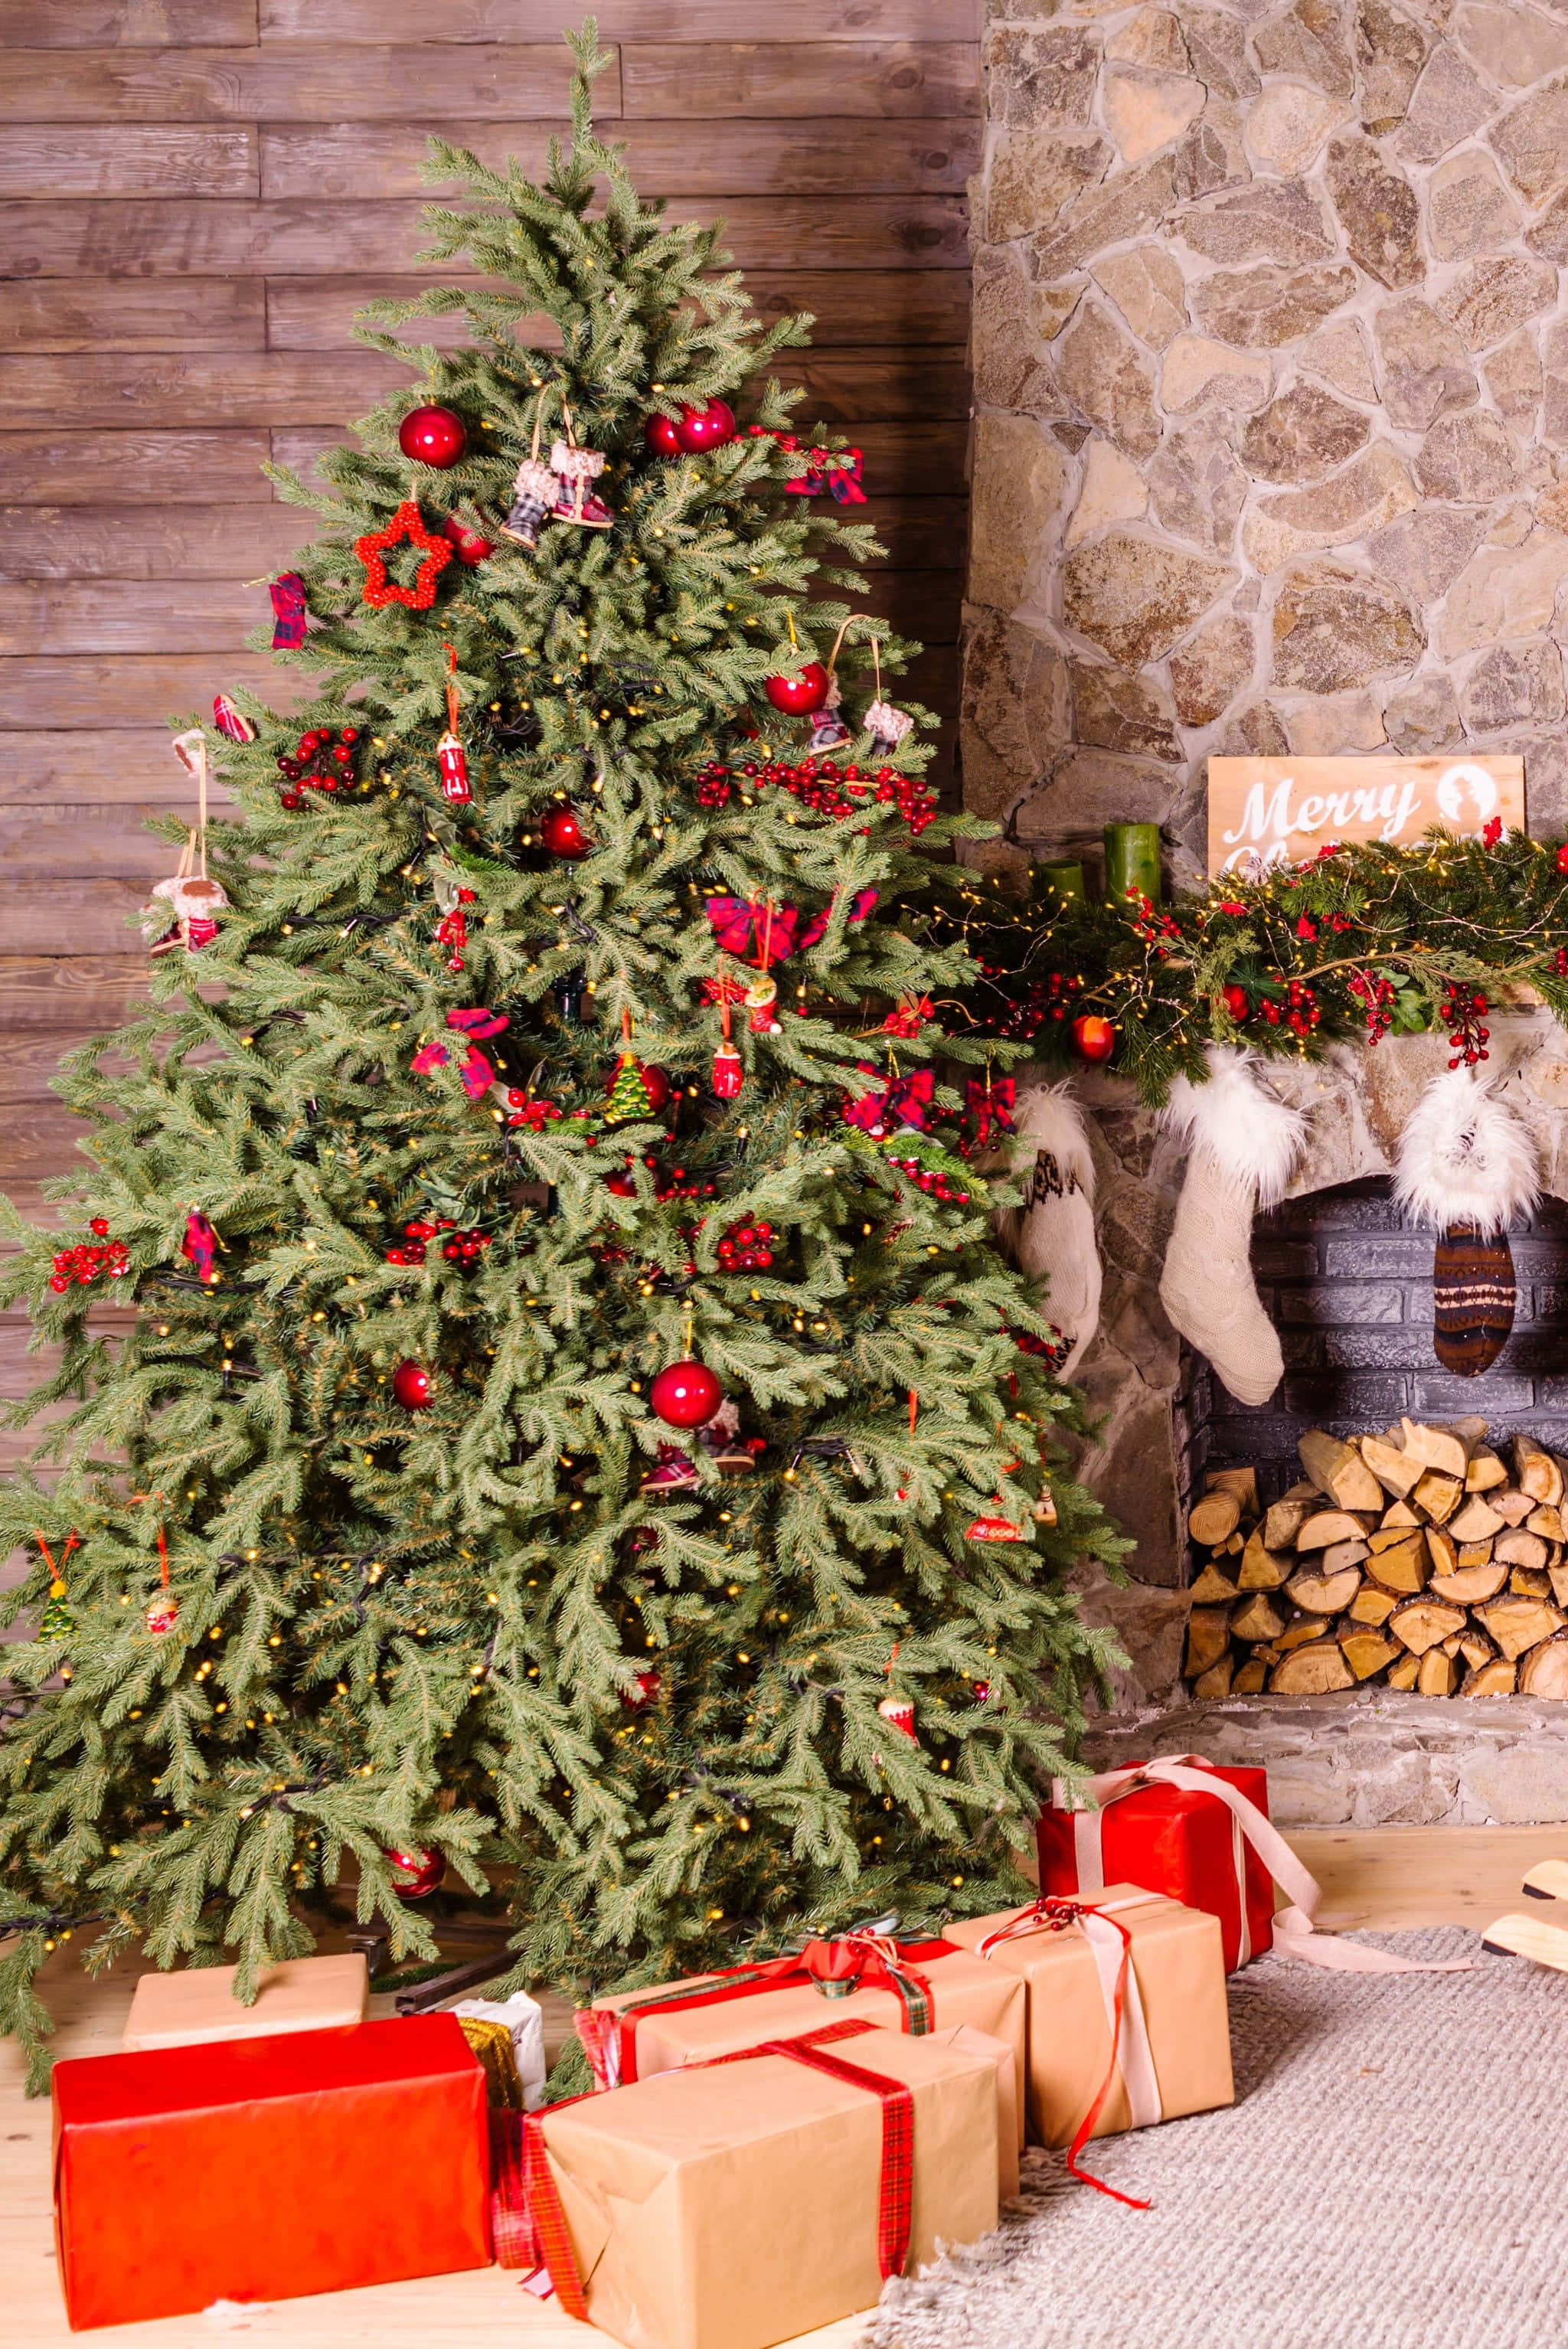 A beautiful, aesthetic Christmas tree for a festive holiday season. Wallpaper